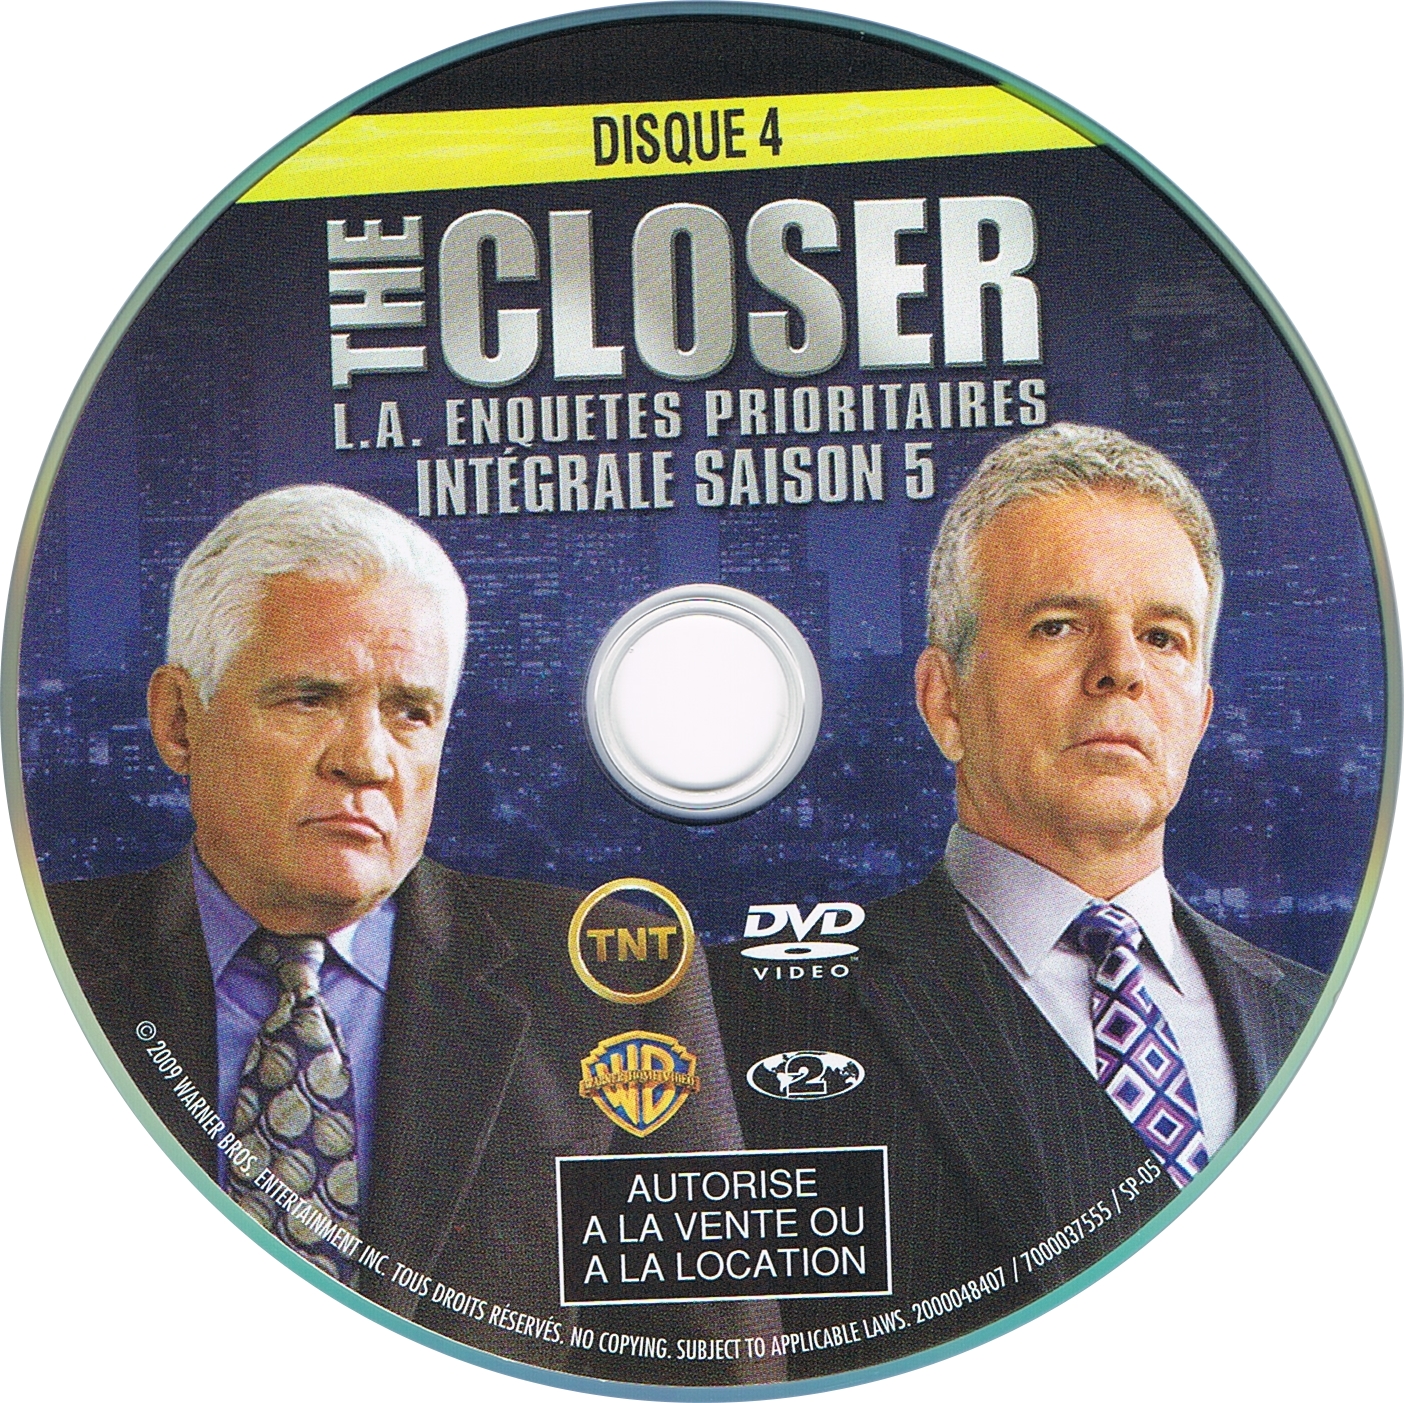 The Closer Saison 5 DISC 4